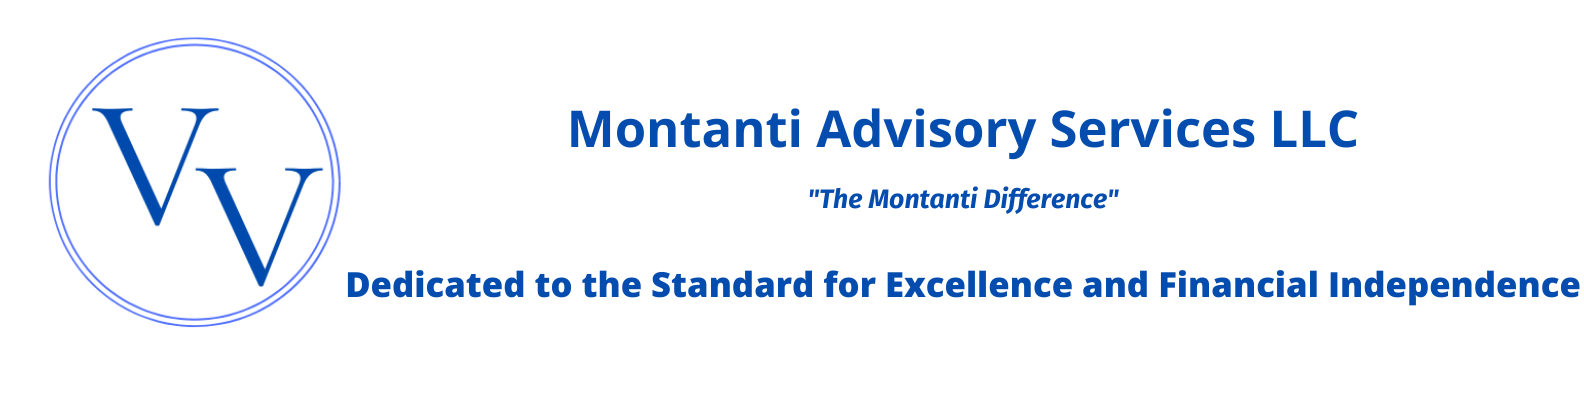 Montanti Advisory Services, LLC